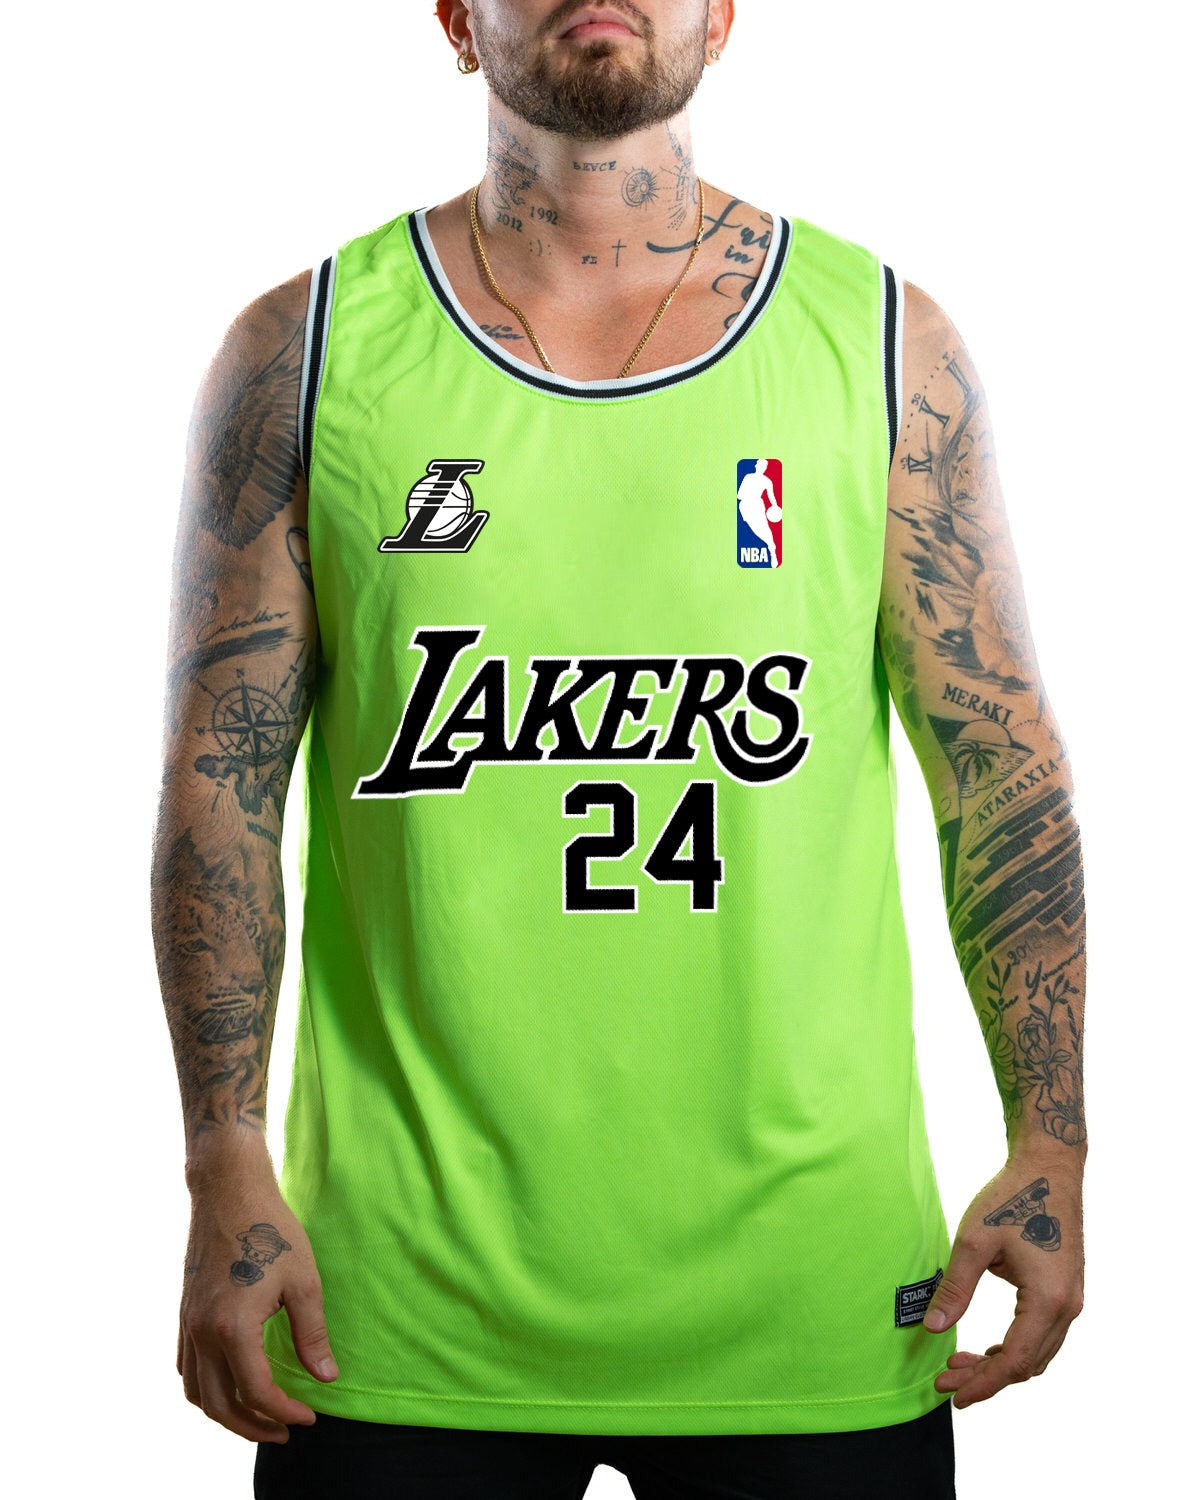 Camisilla Verde Neon Lakers 24